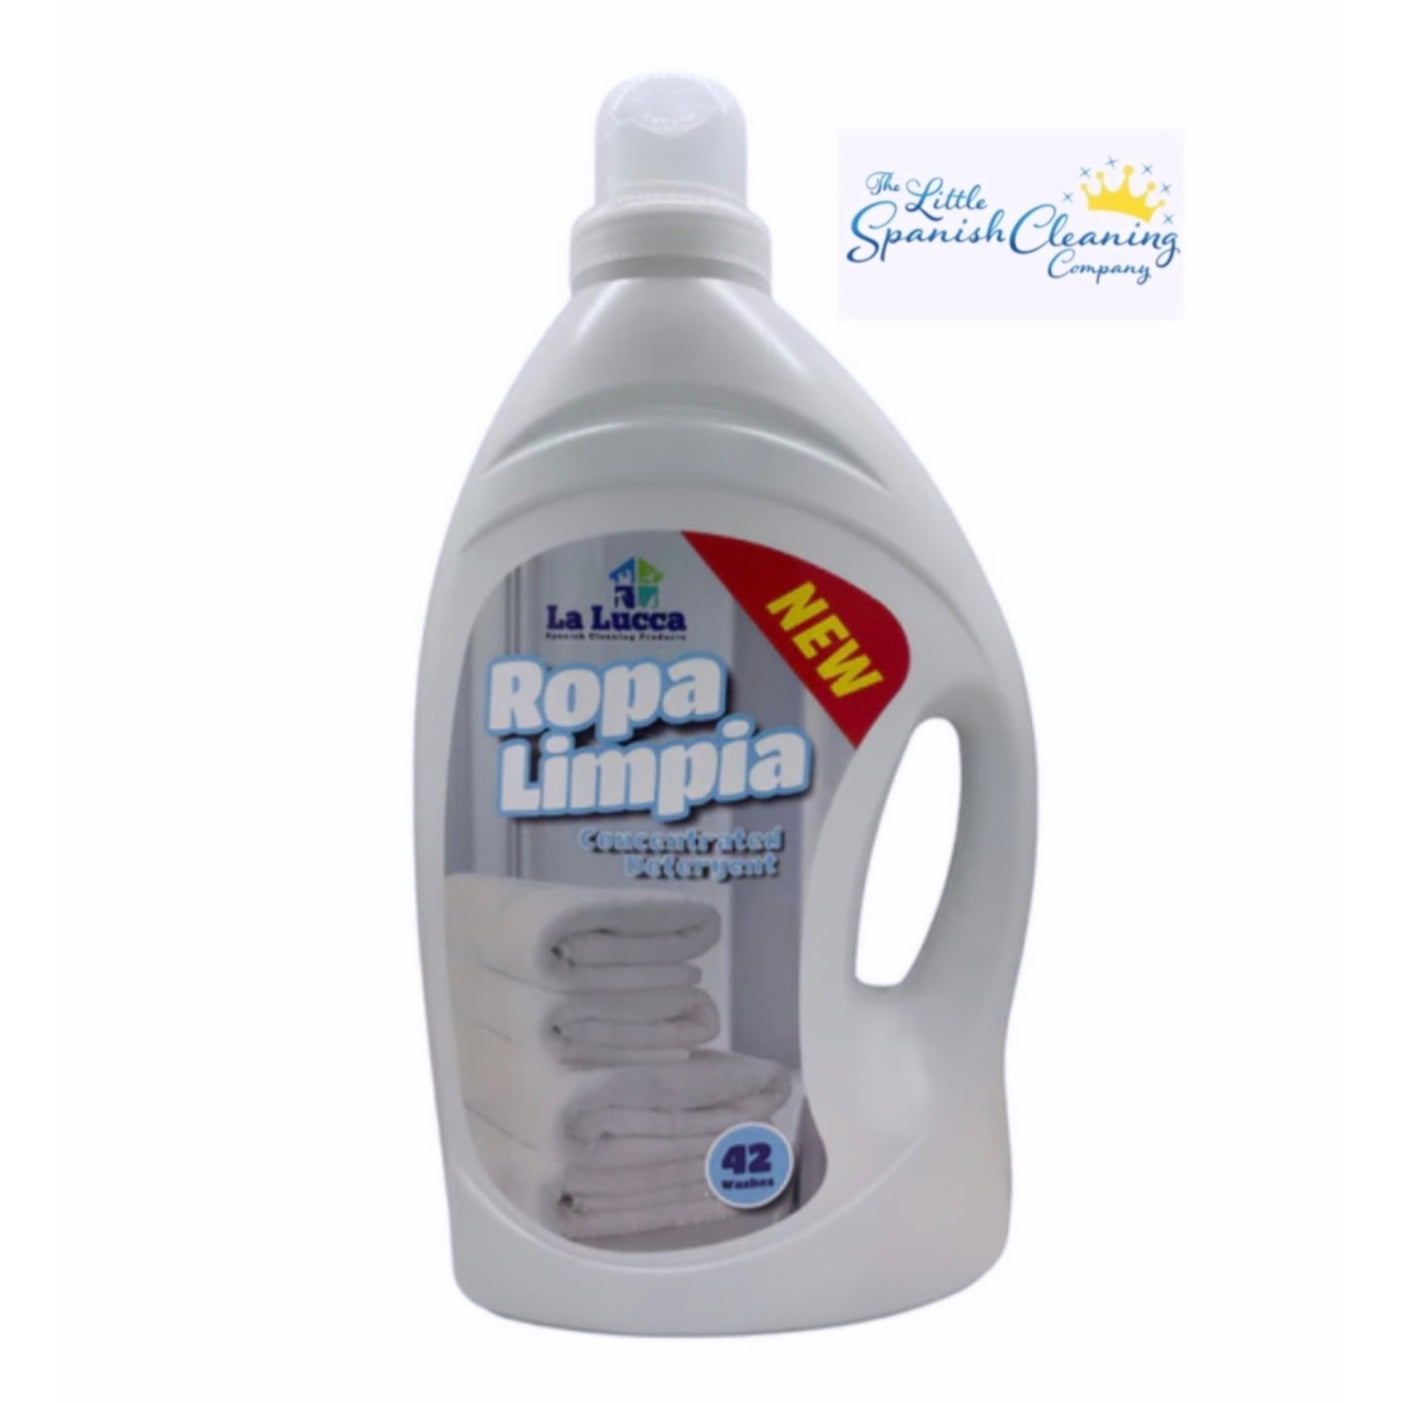 Ropa Limpia Detergent